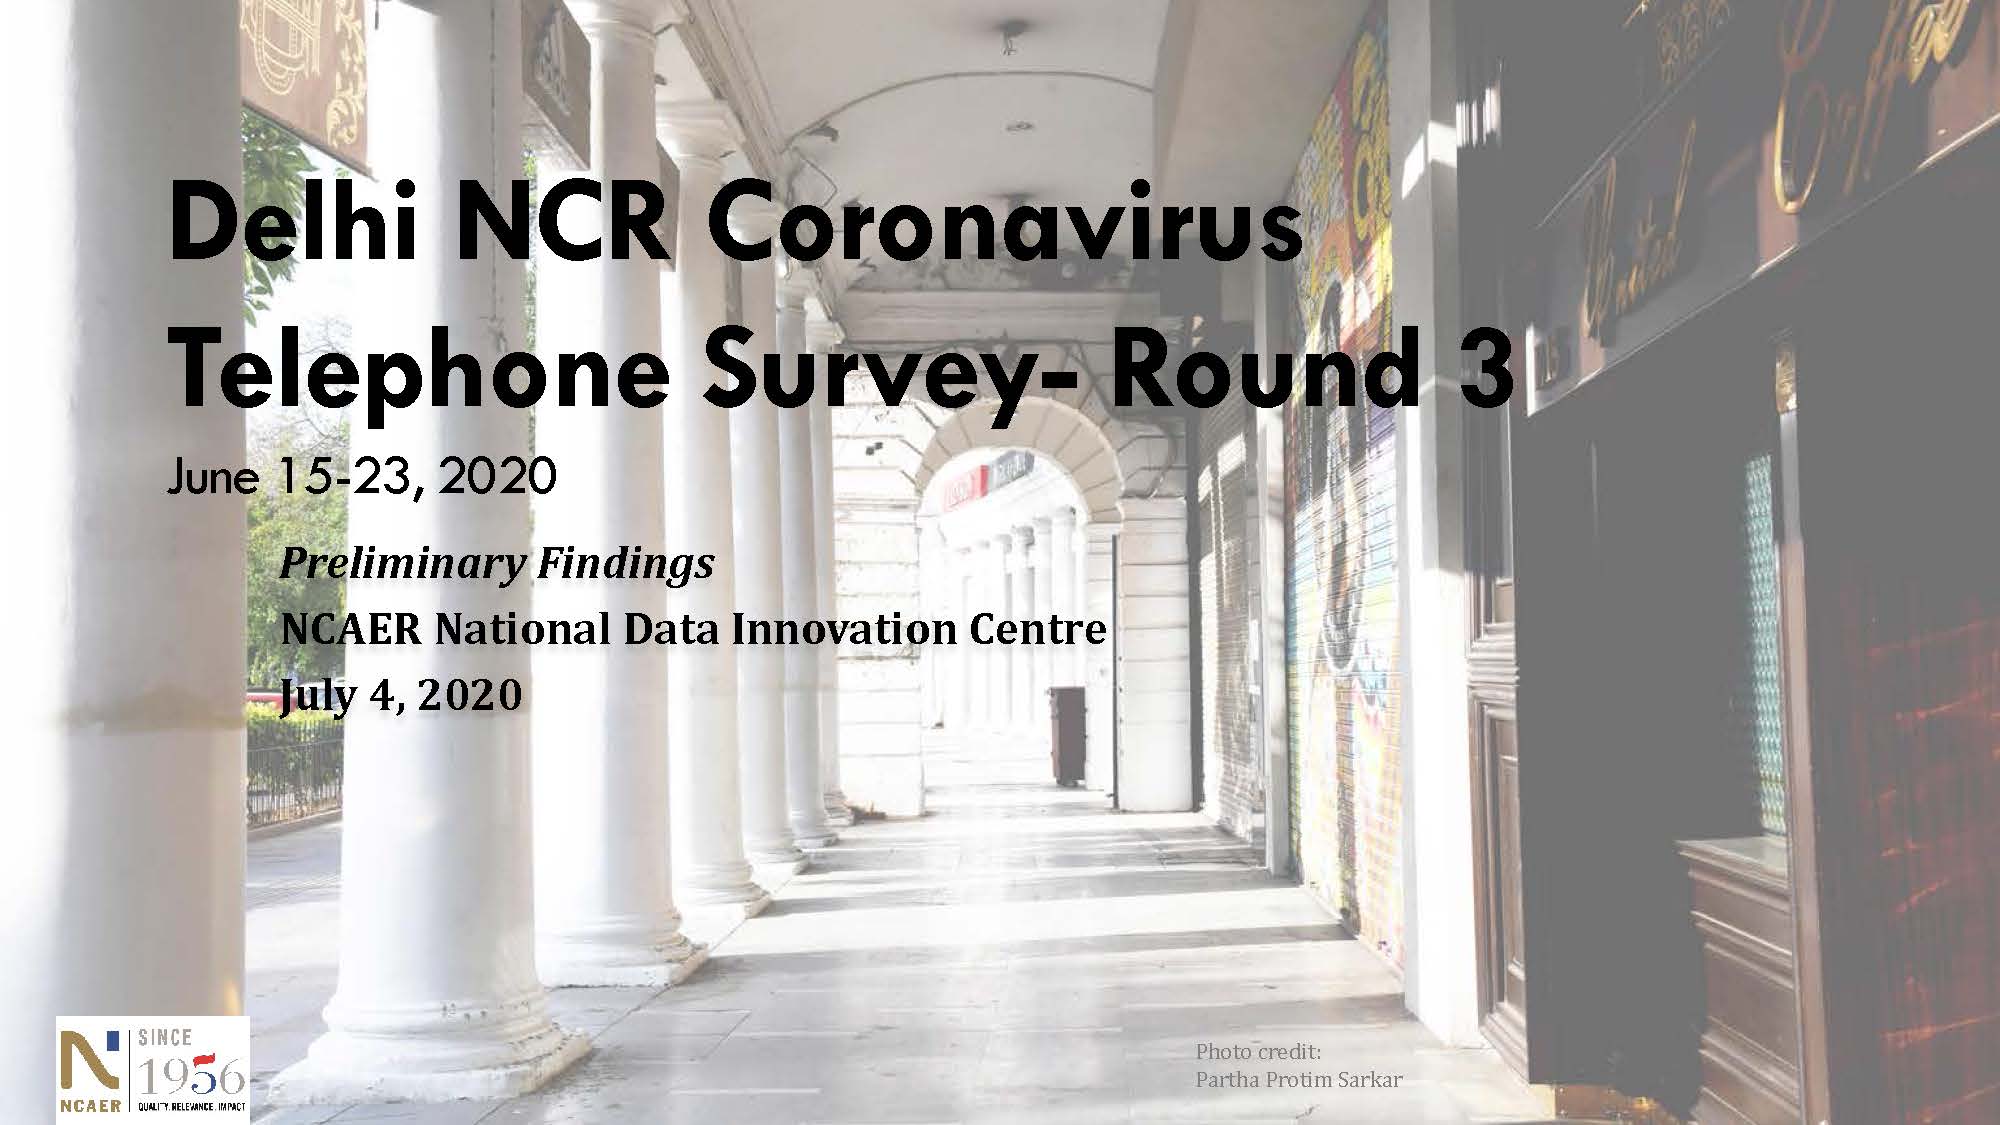 Round 3: NCAER’S Delhi NCR Coronavirus Telephone Survey: From Lockdowns to Lifting Restrictions